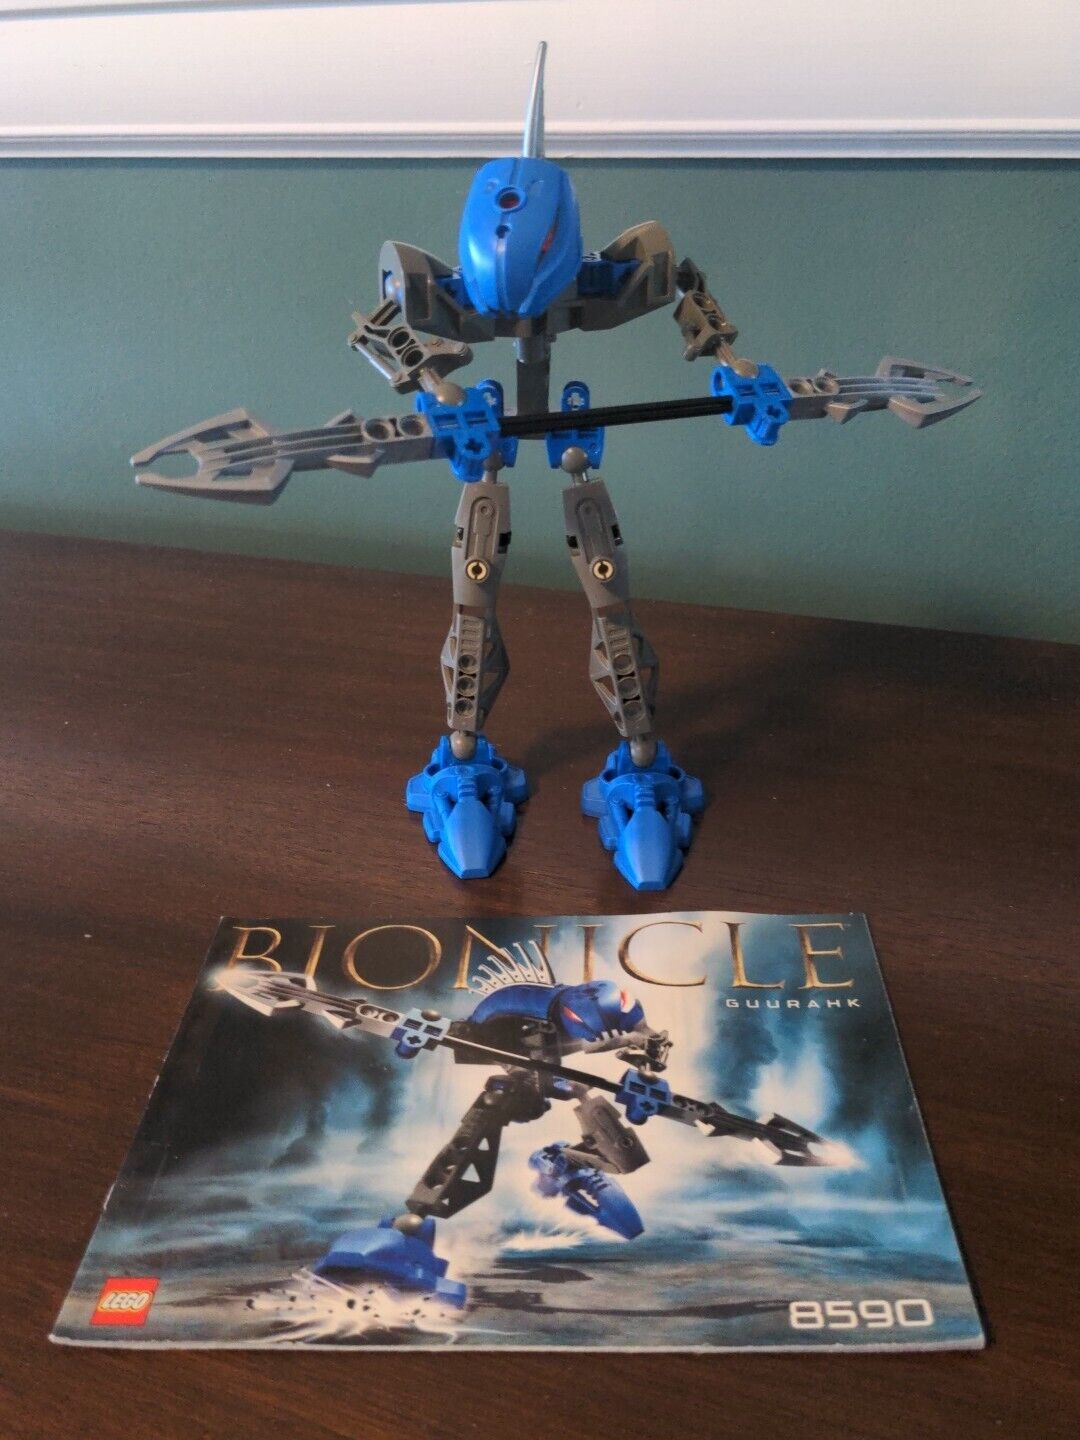 LEGO Bionicle - 8590 Rahkshi Guurahk w/ Kraata & Booklet - 100% COMPLETE